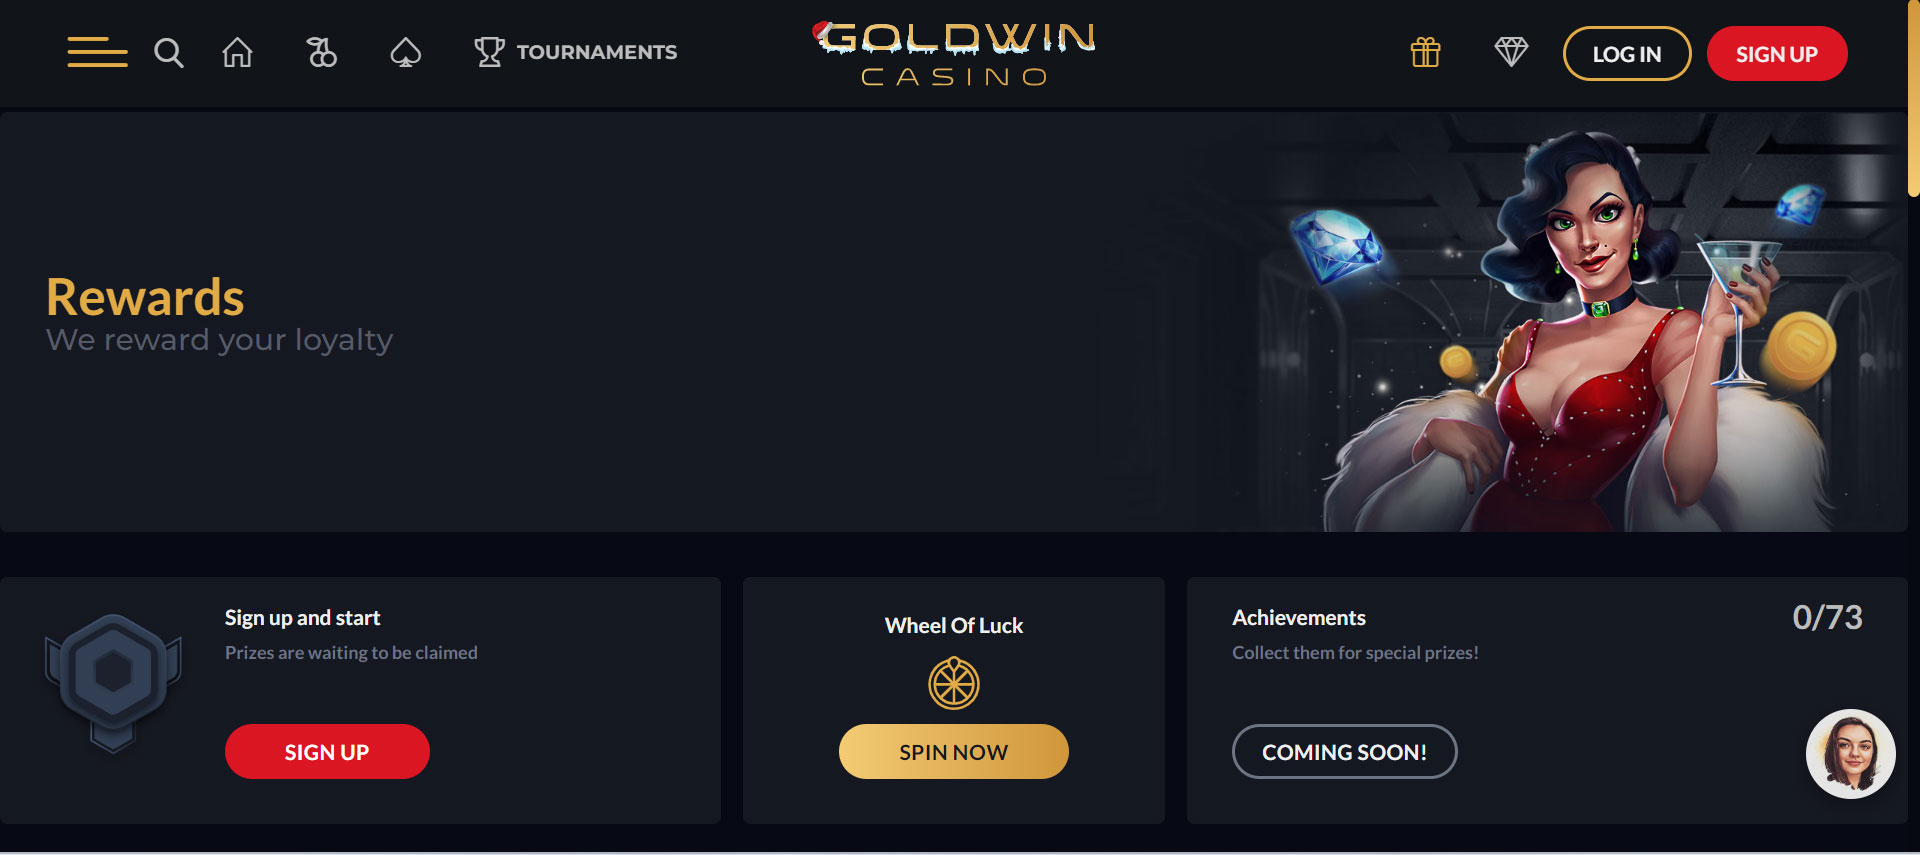 GoldWin Casino Rewards